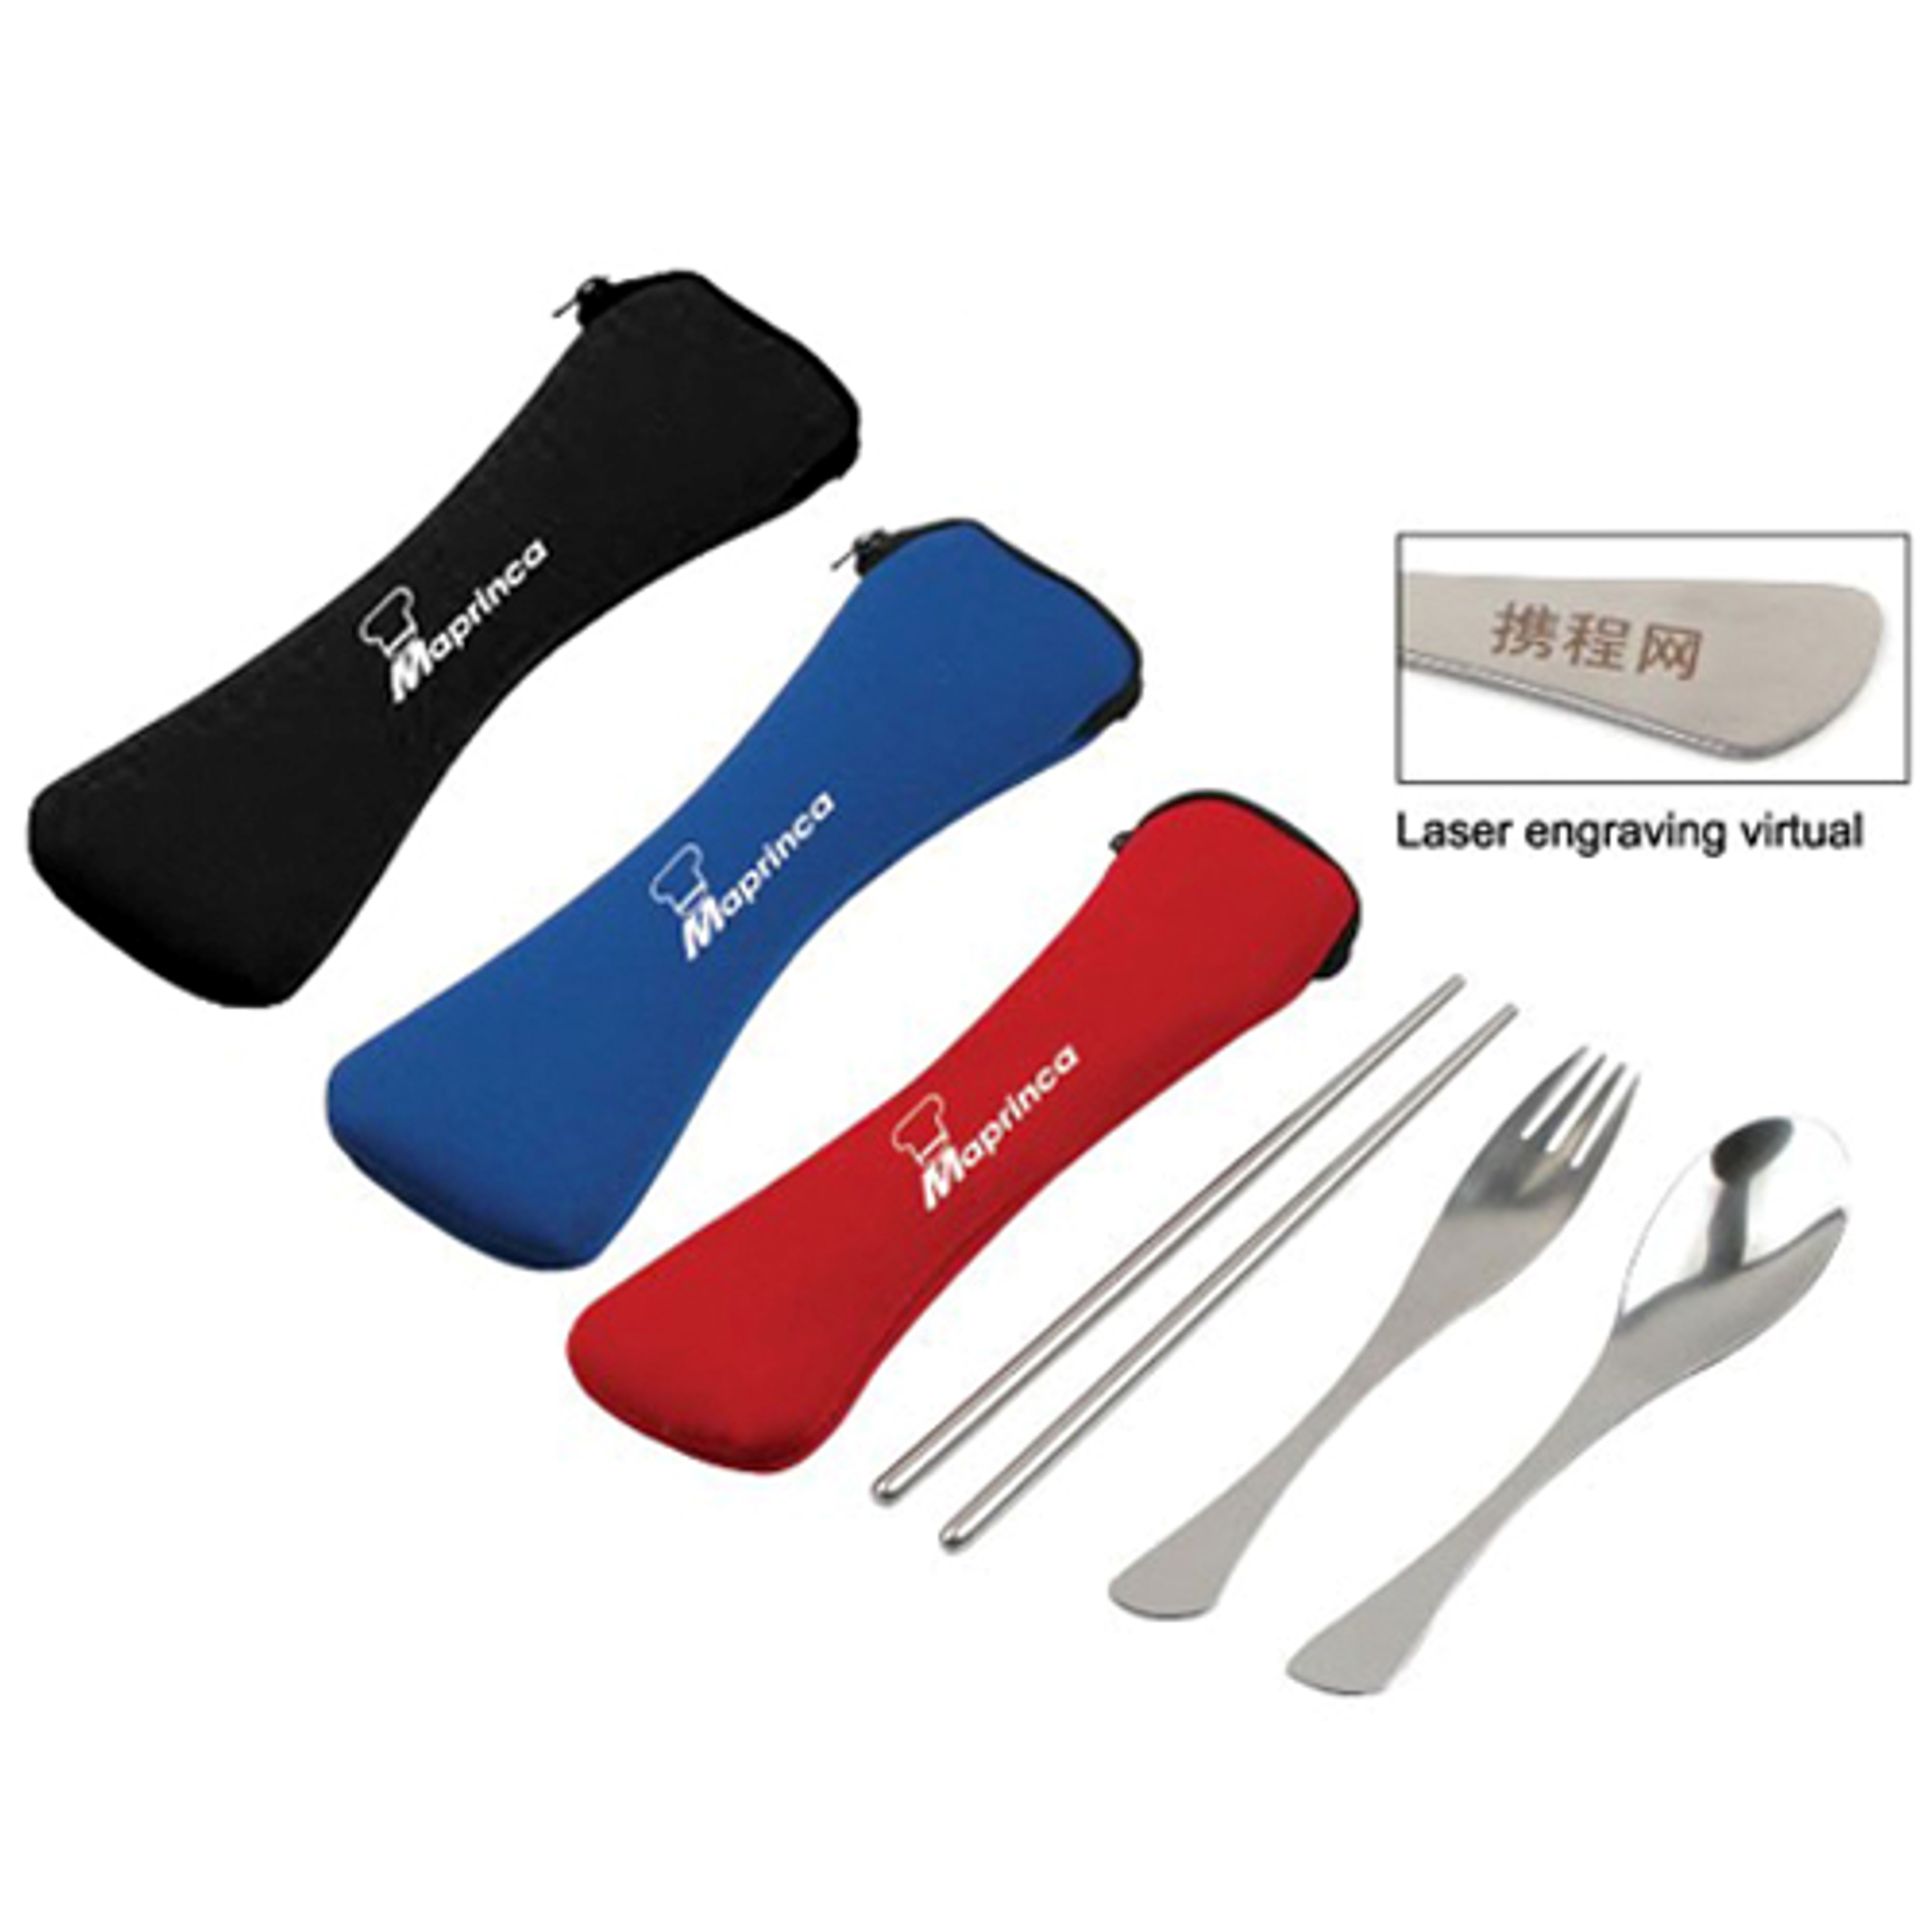 Stainless Steel Fork, Spoon, Chopsticks Set in Neoprene Pouch | Reusable